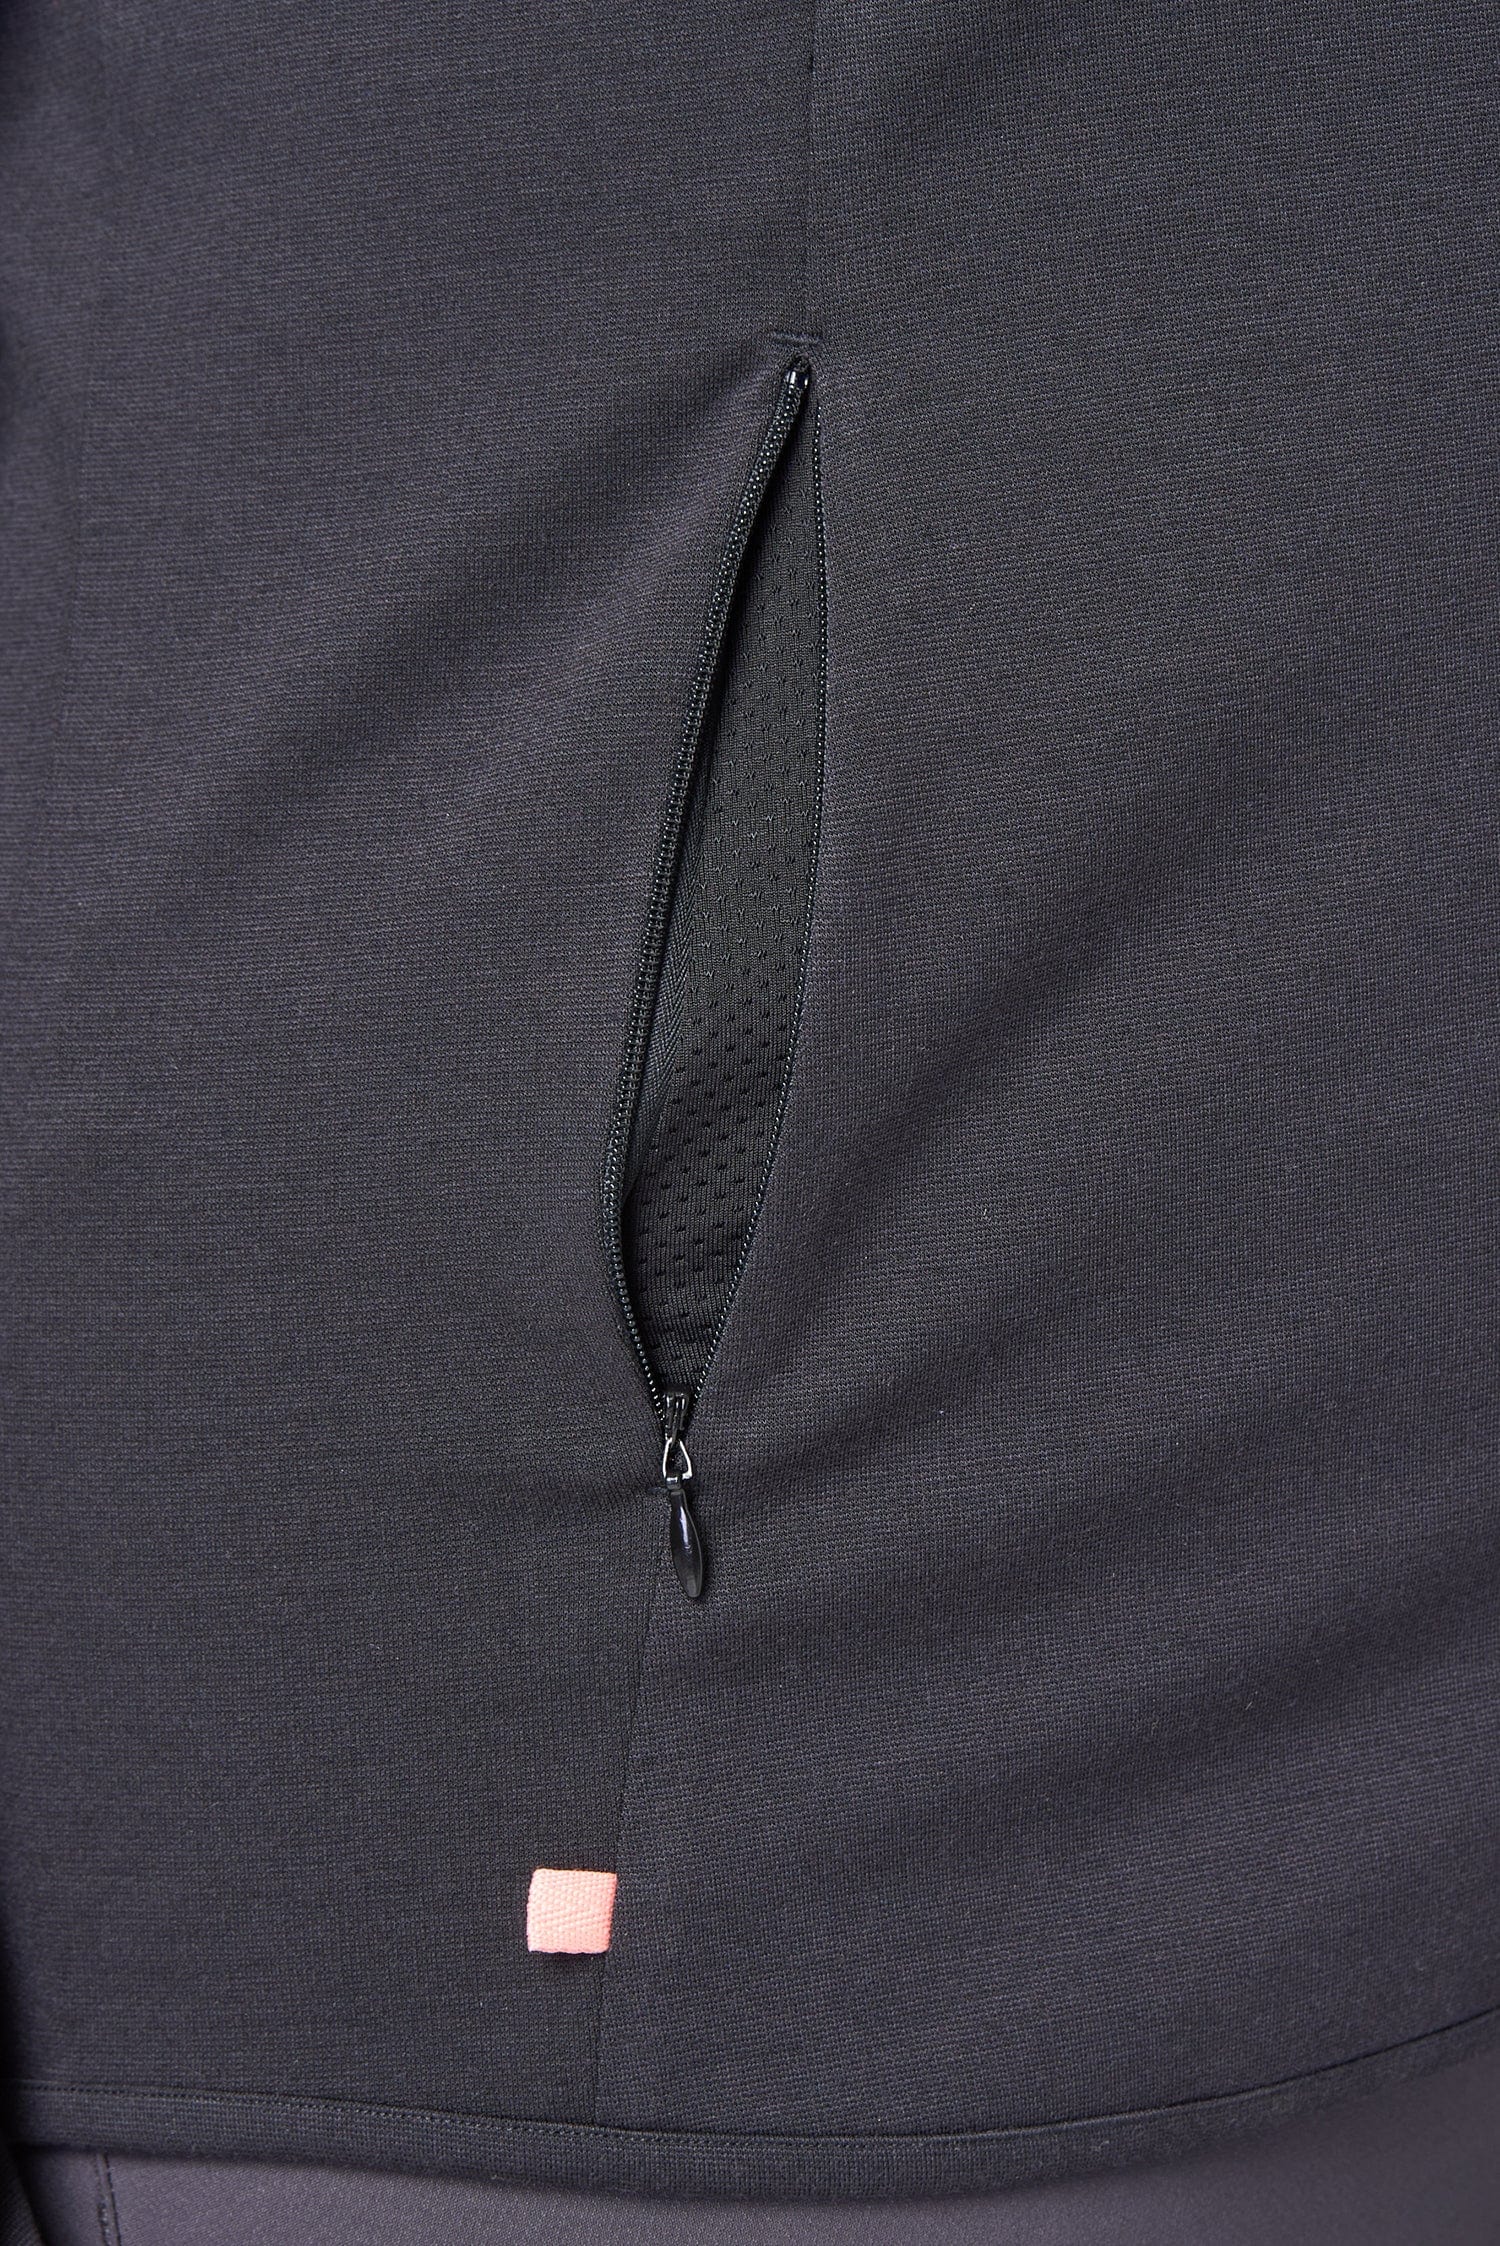 ACAI Outdoorwear  Performance Full Zip Activewear Top - Charcoal